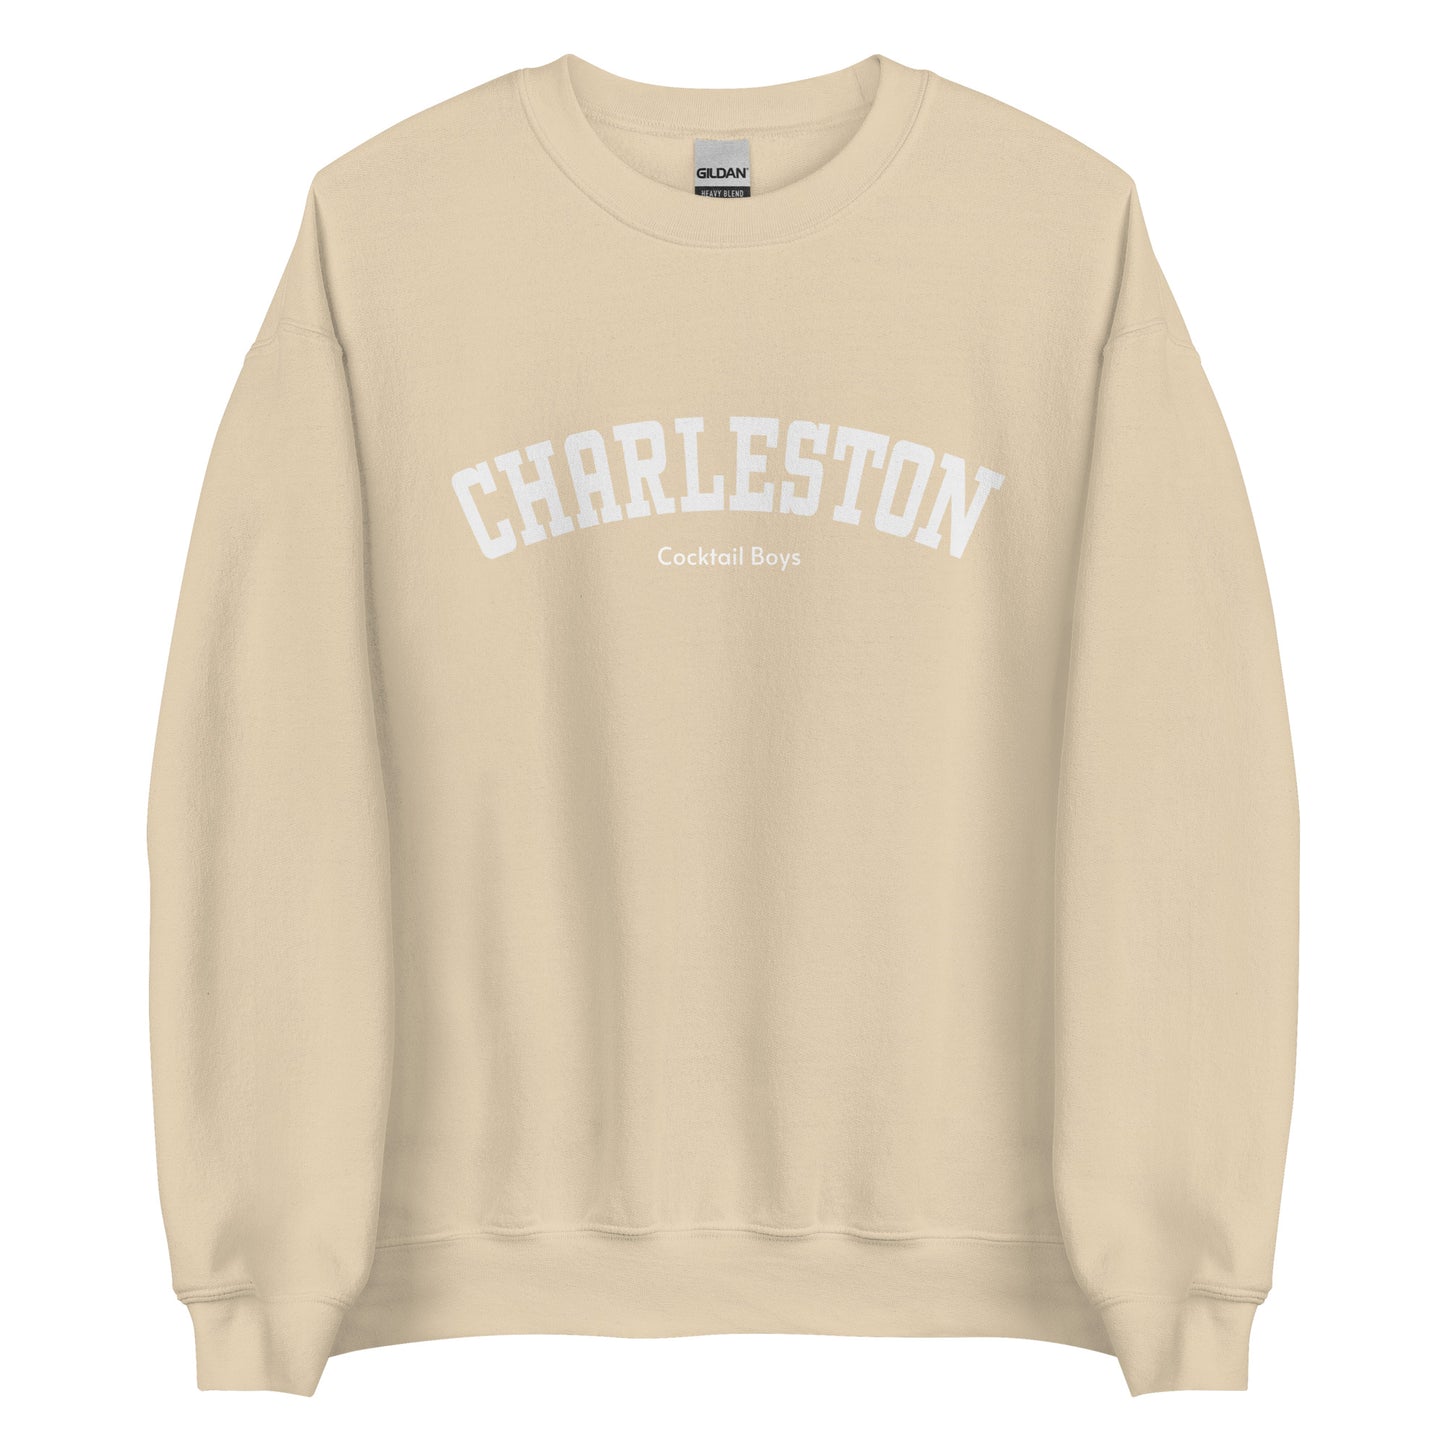 Charleston Unisex Sweatshirt